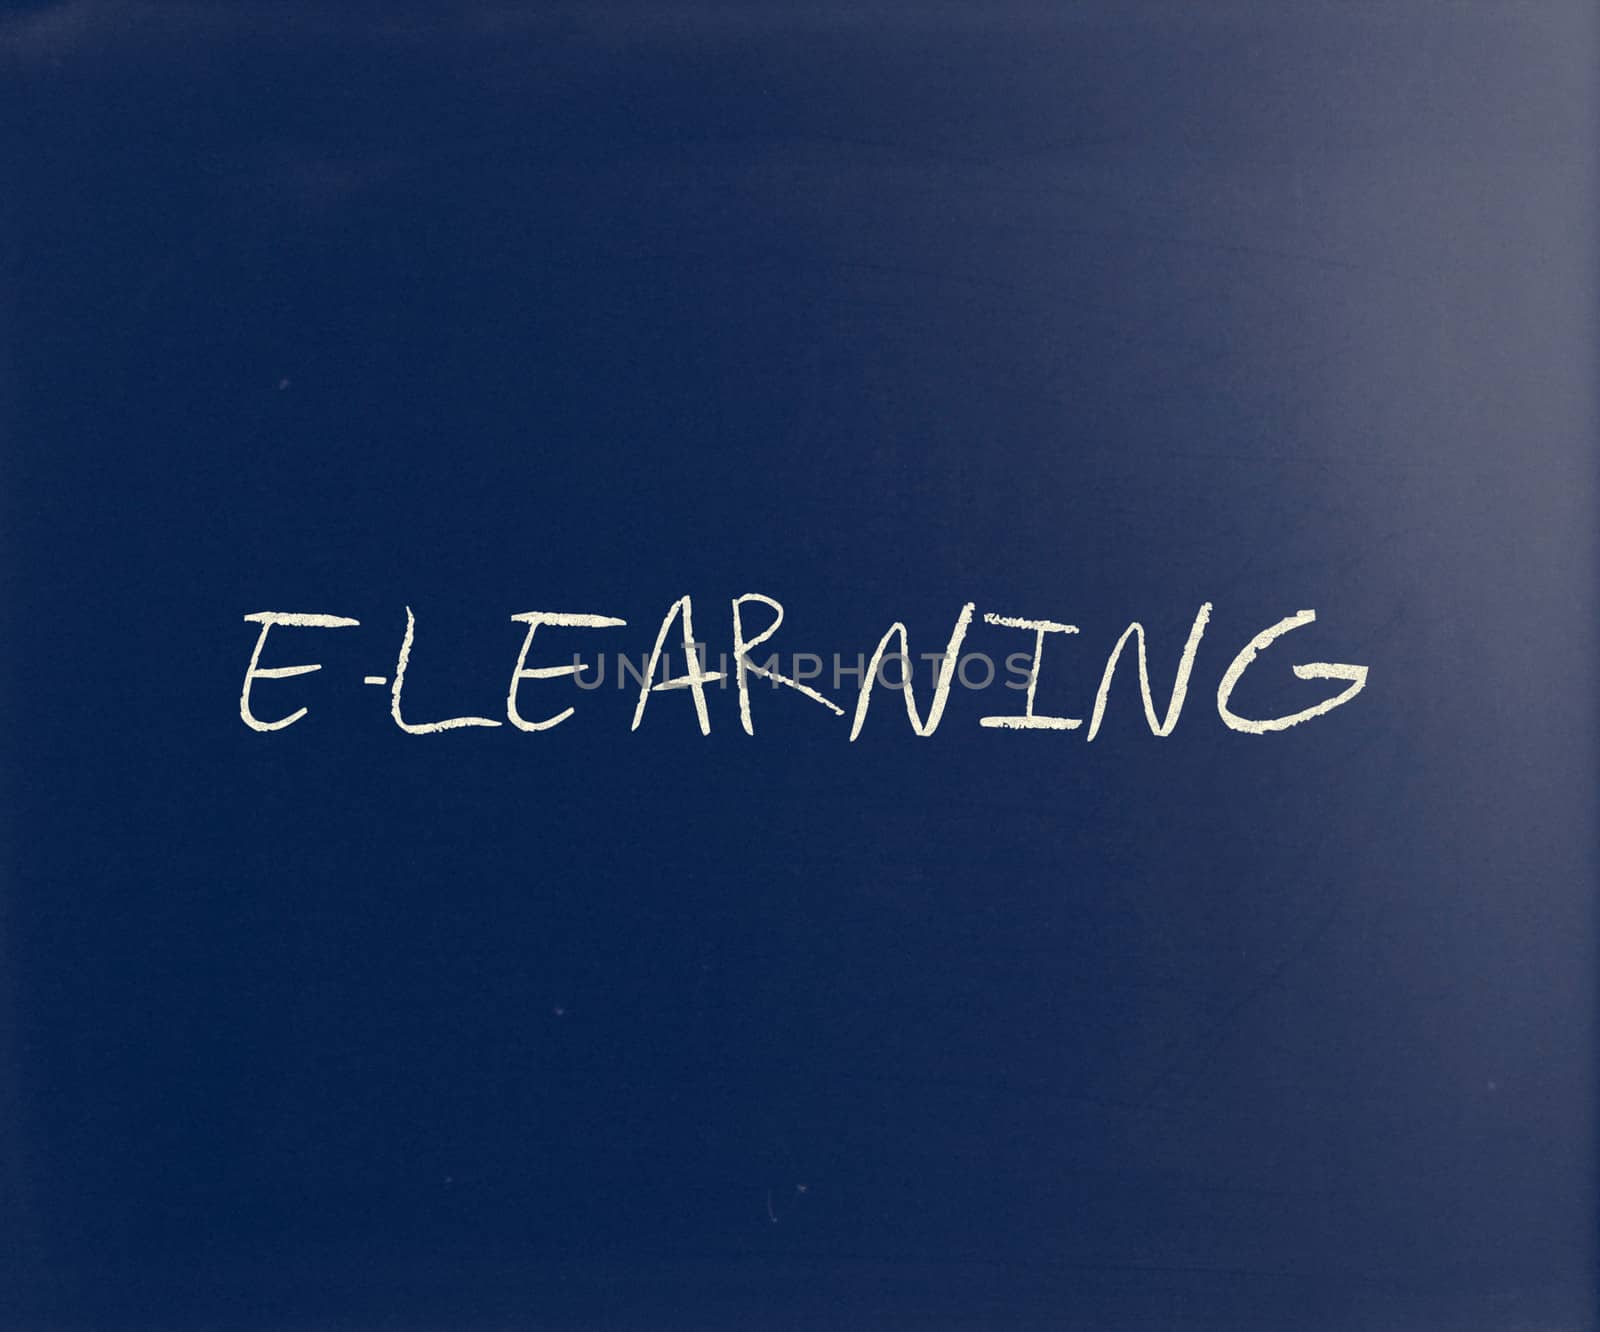 "E-learning" handwritten with white chalk on a blackboard by nenov